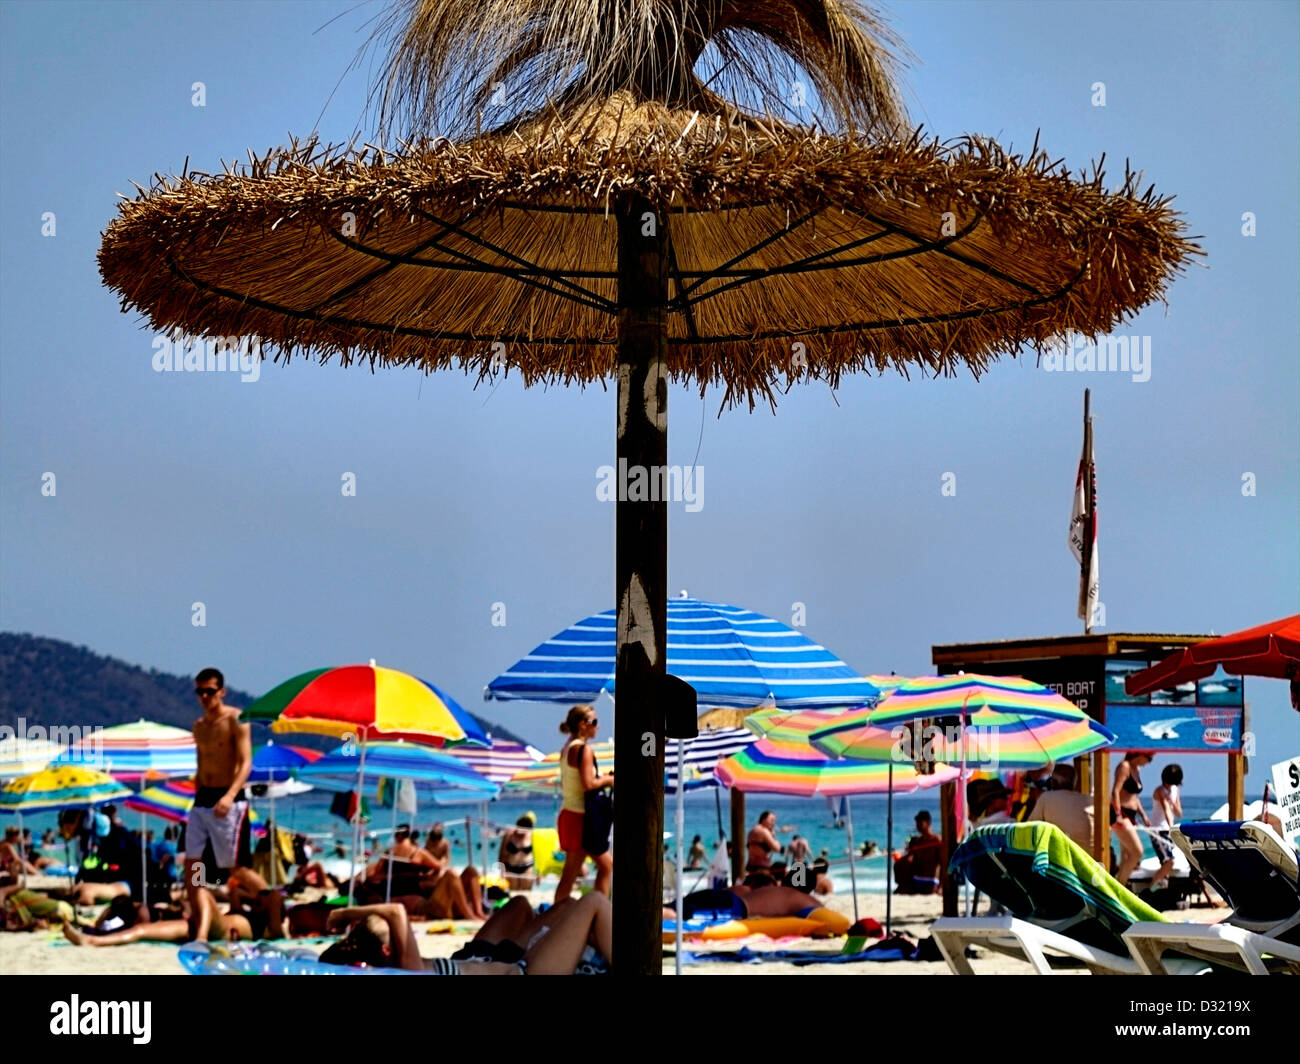 Sun parasols on the beach in the Algarve, Portugal Stock Photo